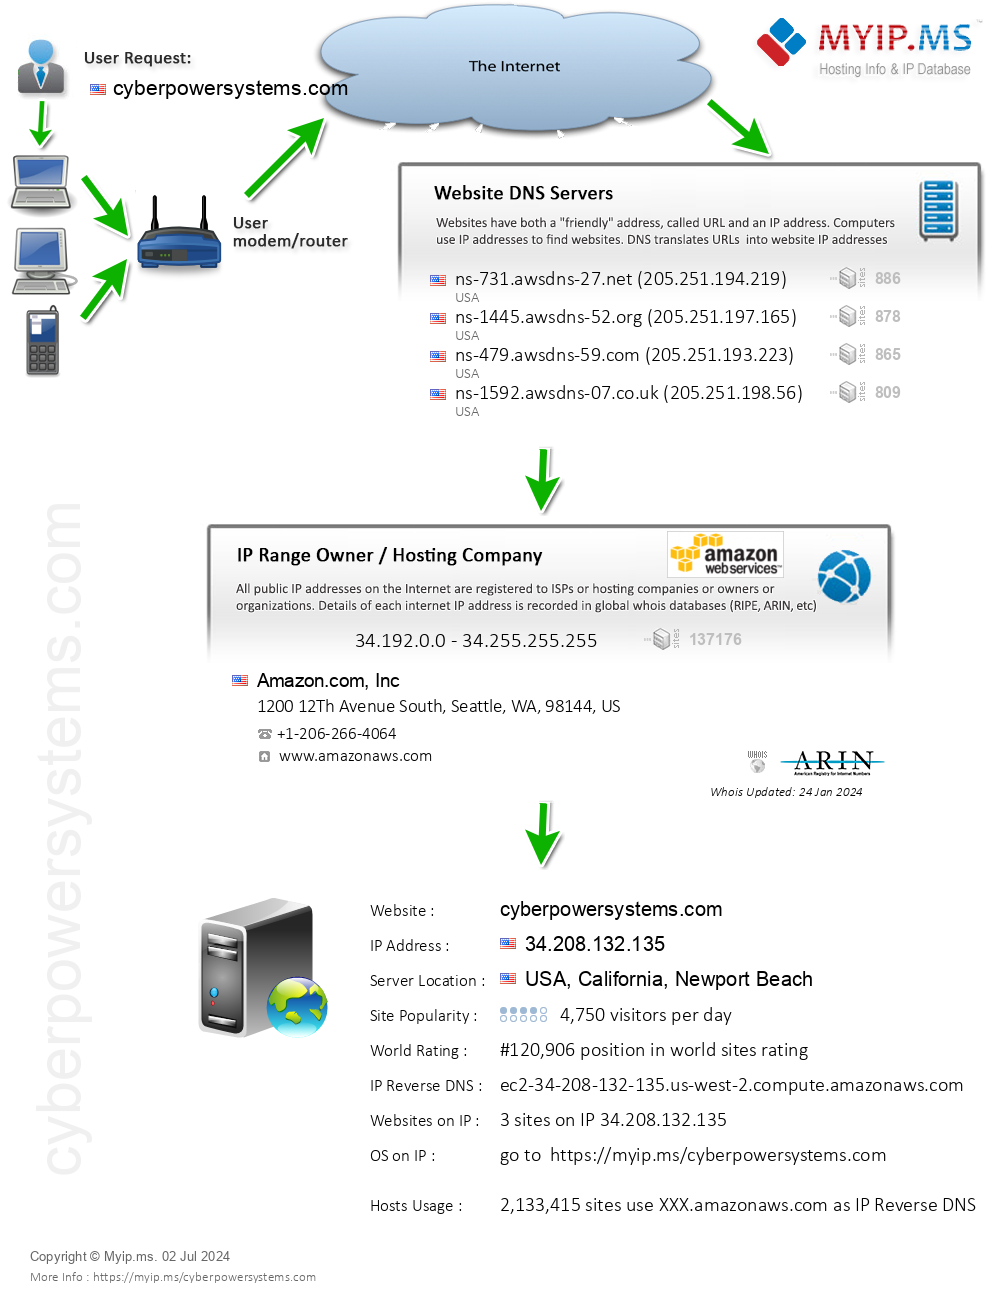 Cyberpowersystems.com - Website Hosting Visual IP Diagram